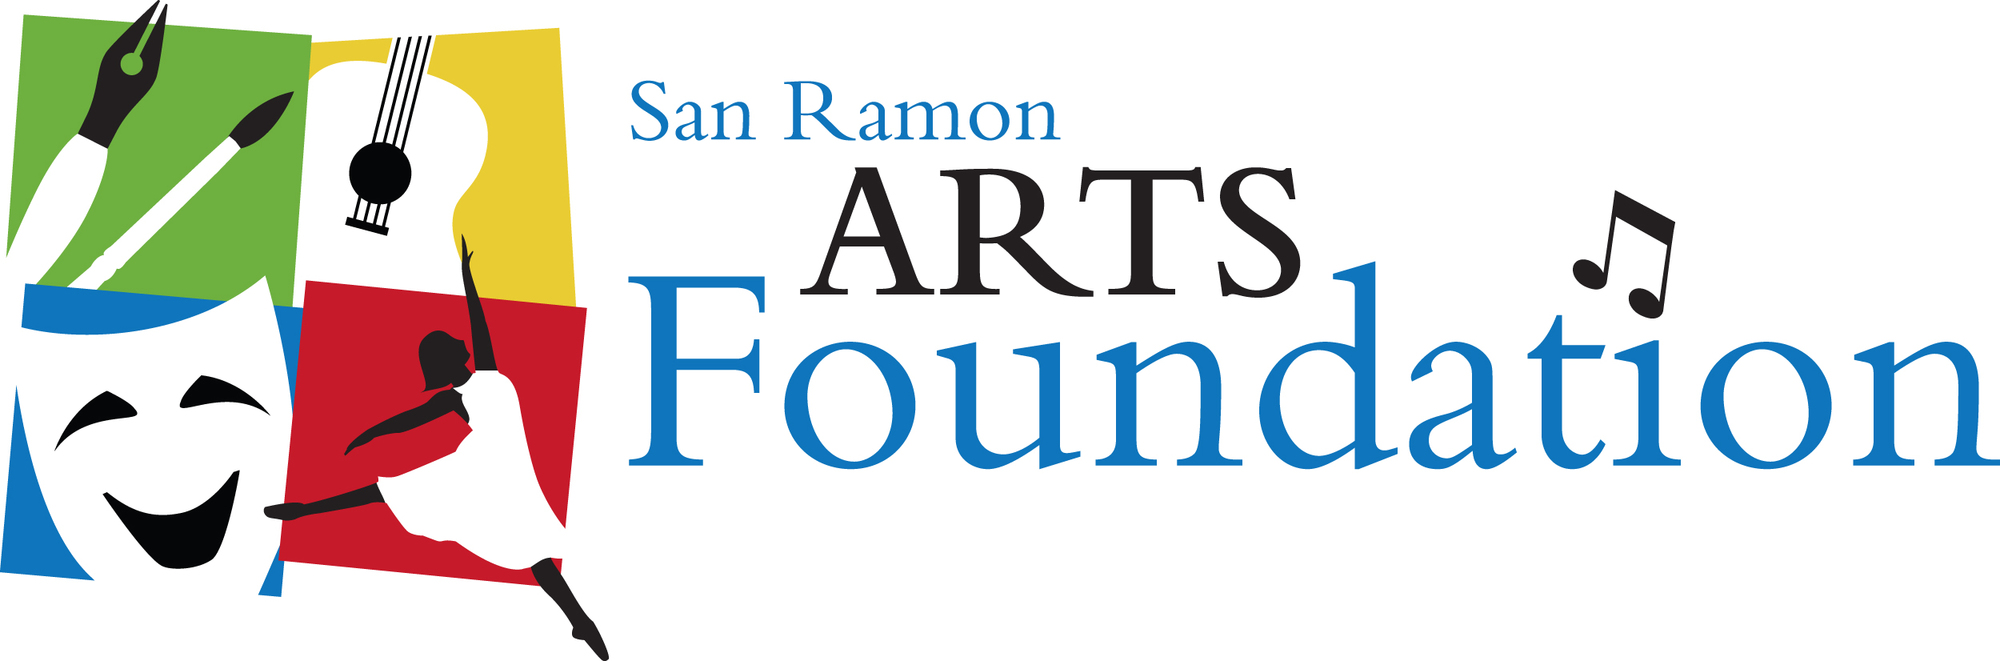 San Ramon Arts Foundation